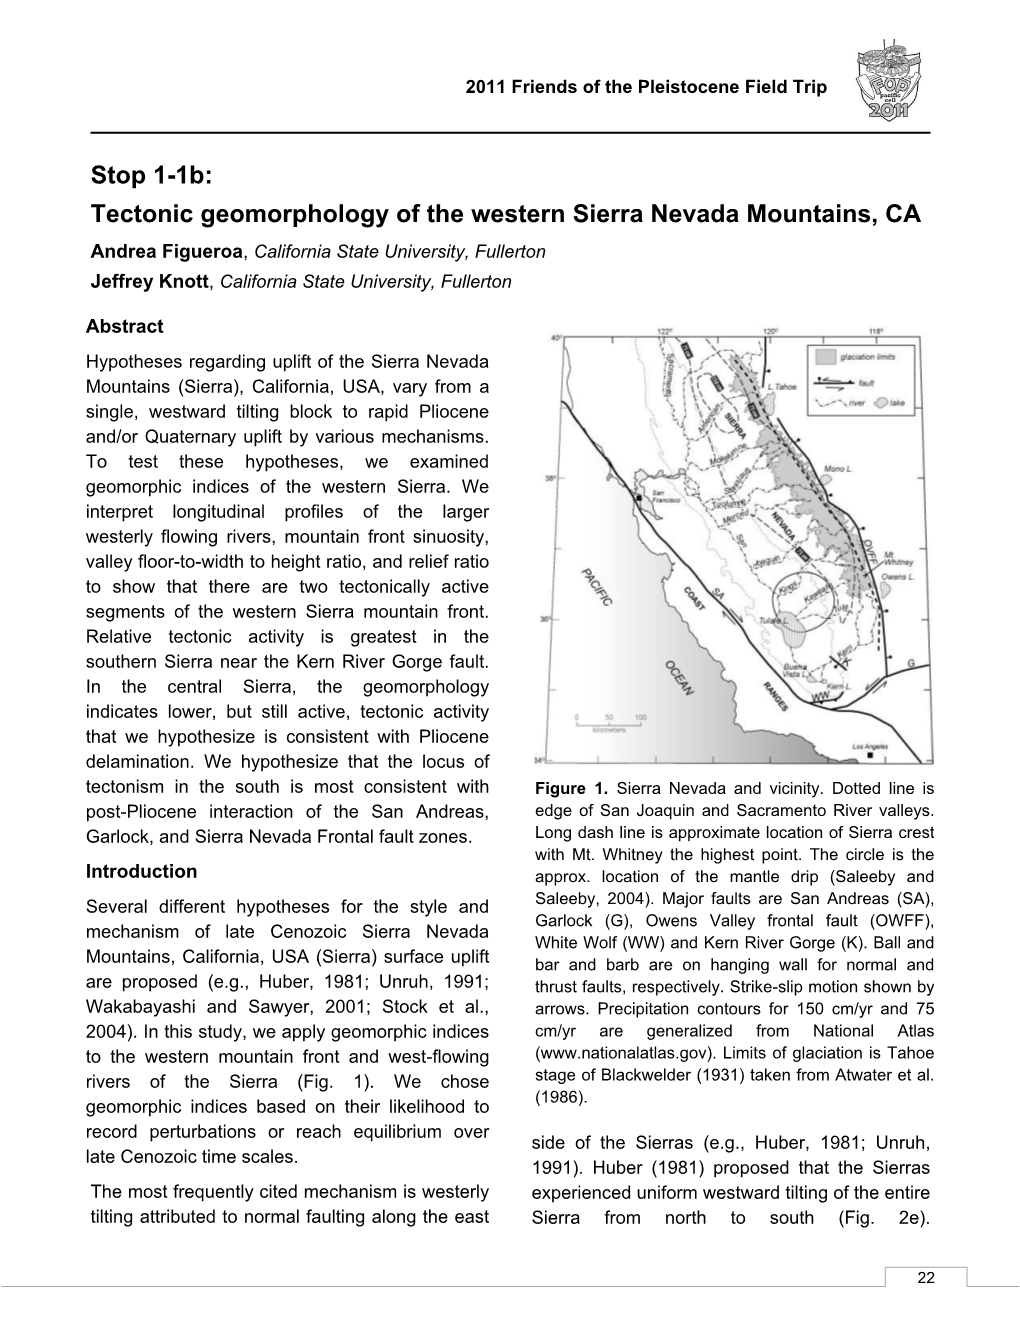 Tectonic Geomorphology of the Western Sierra Nevada Mountains